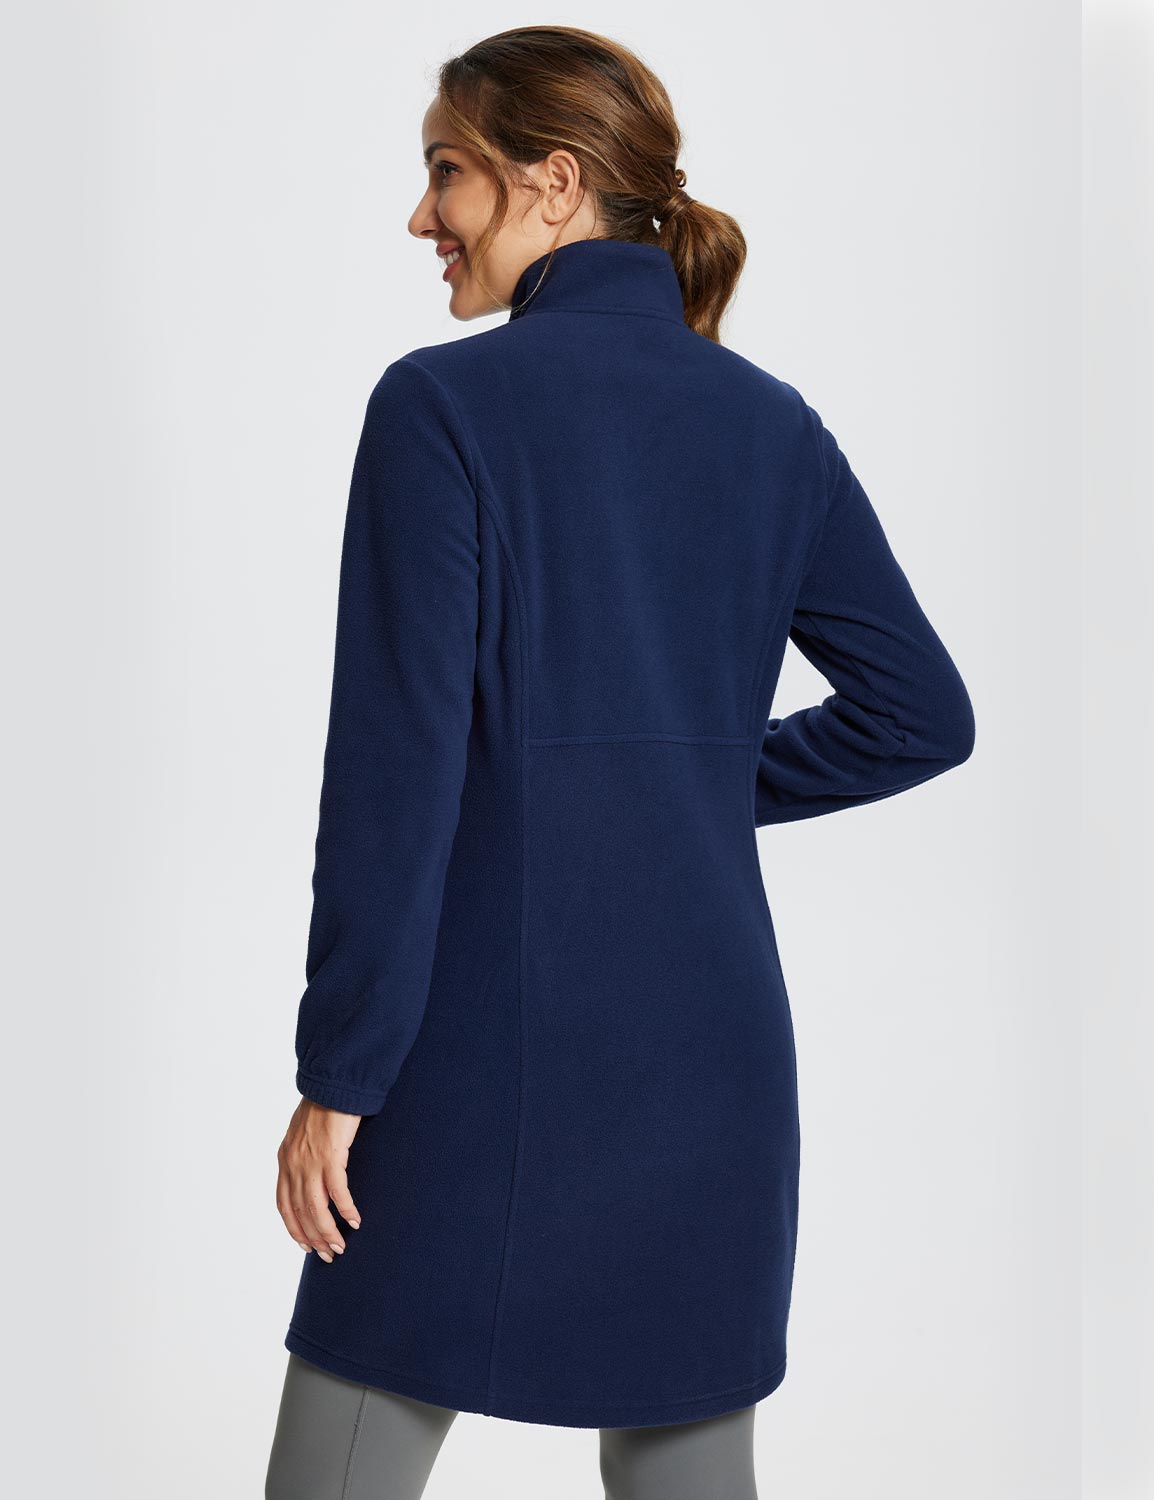 Baleaf Women's Long-Sleeve Quarter Zip Thermal Dress dga069 Navy Blue Back